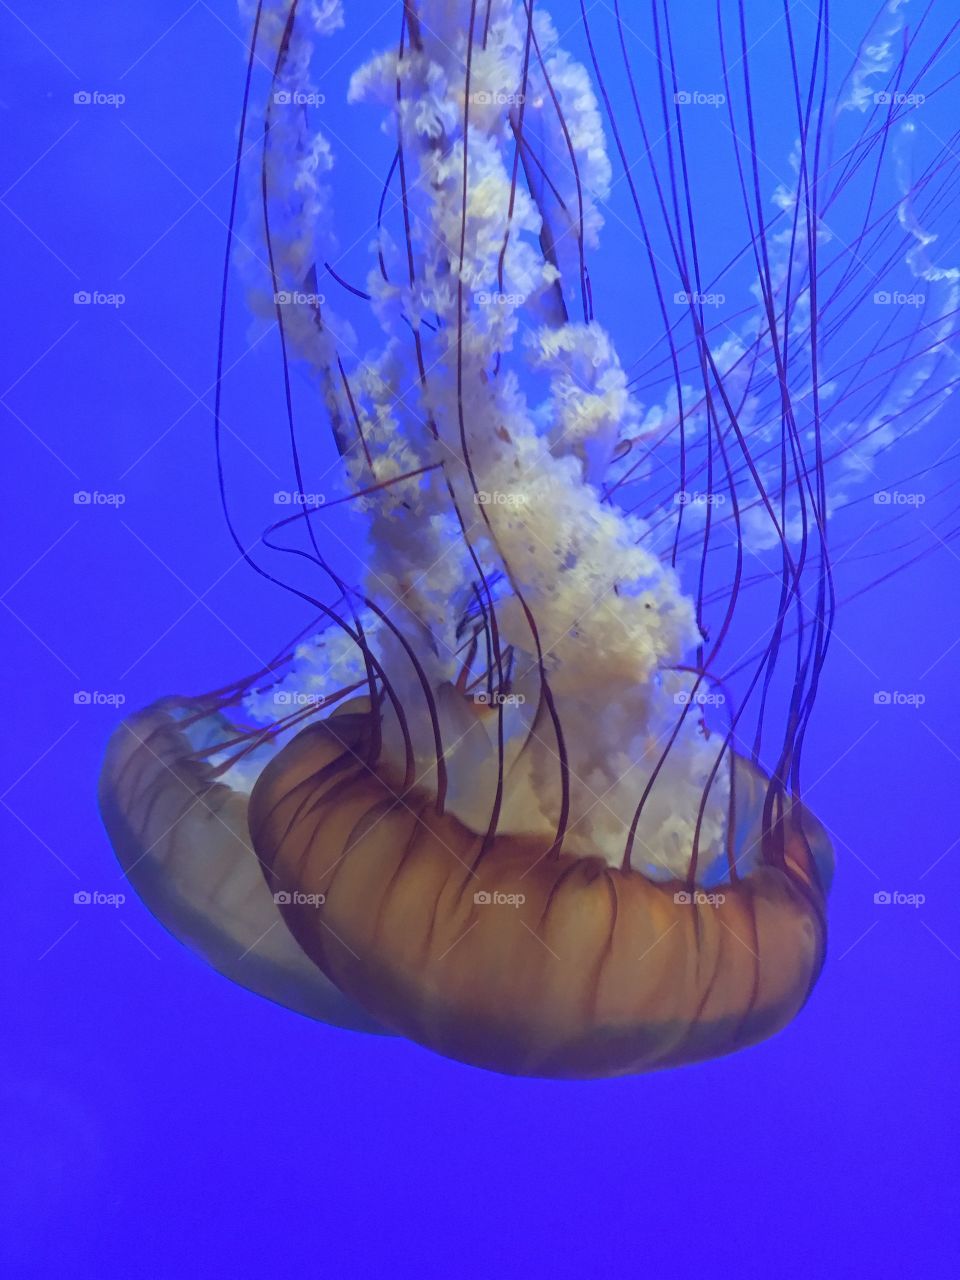 7. Jellyfish